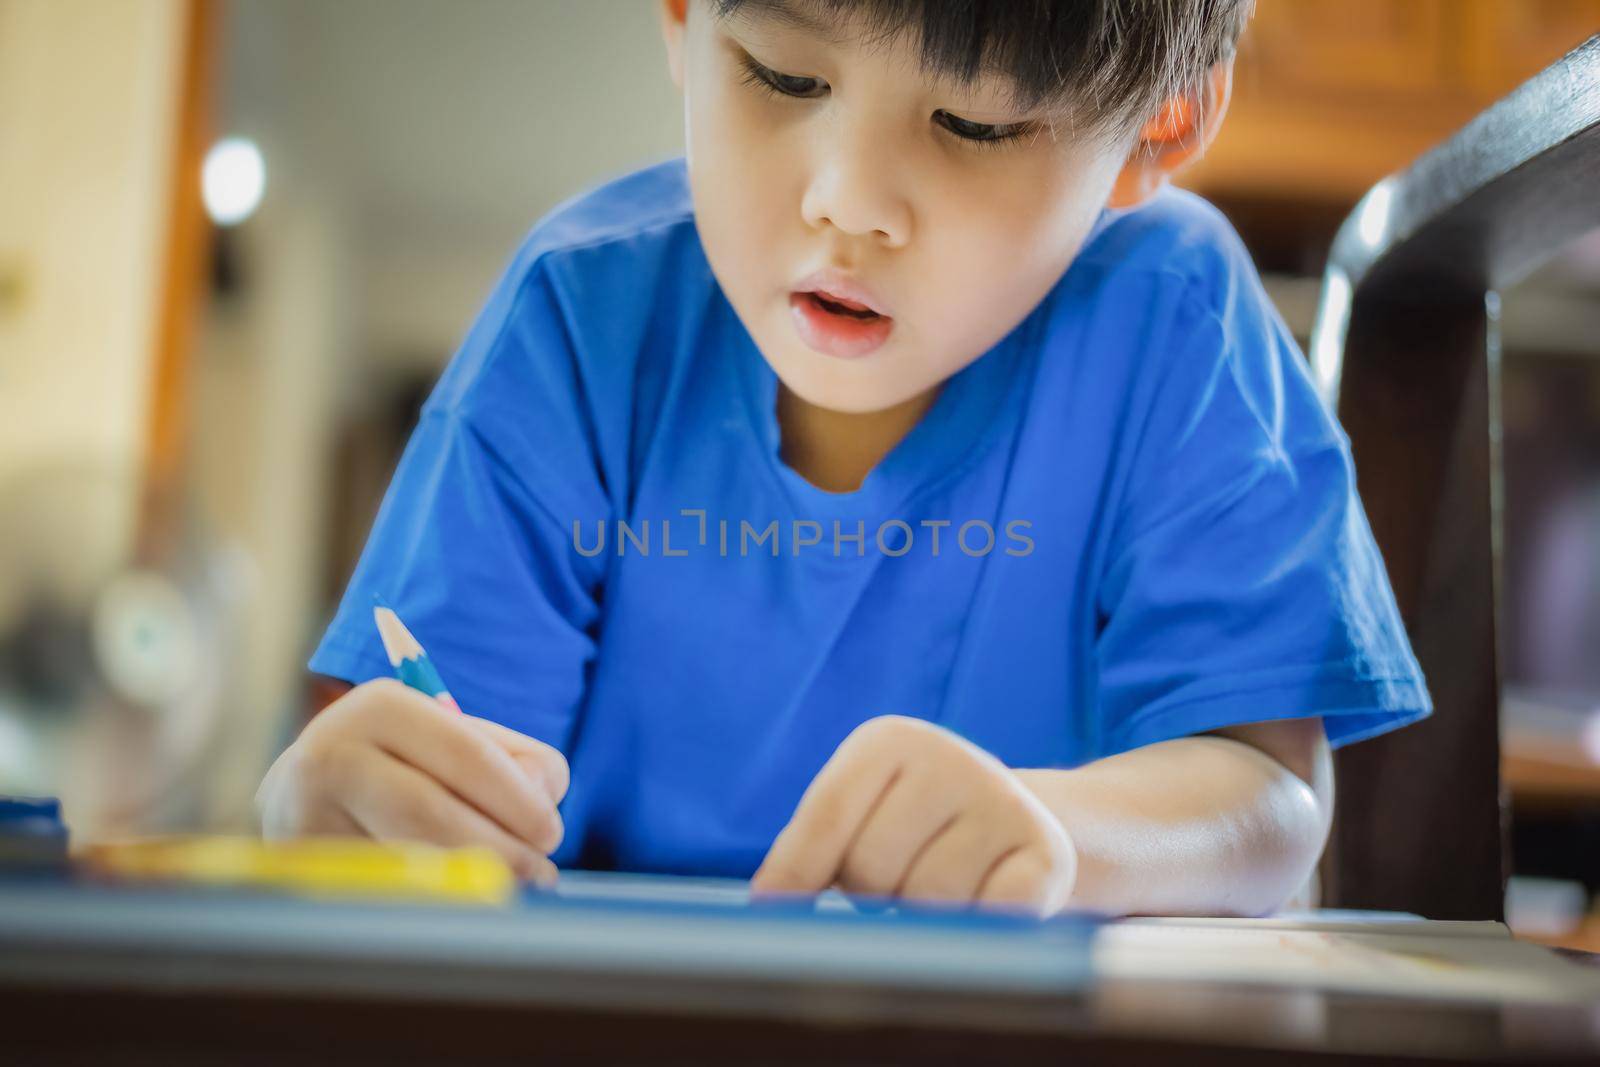 kindergarten children coloring their homework to the teacher